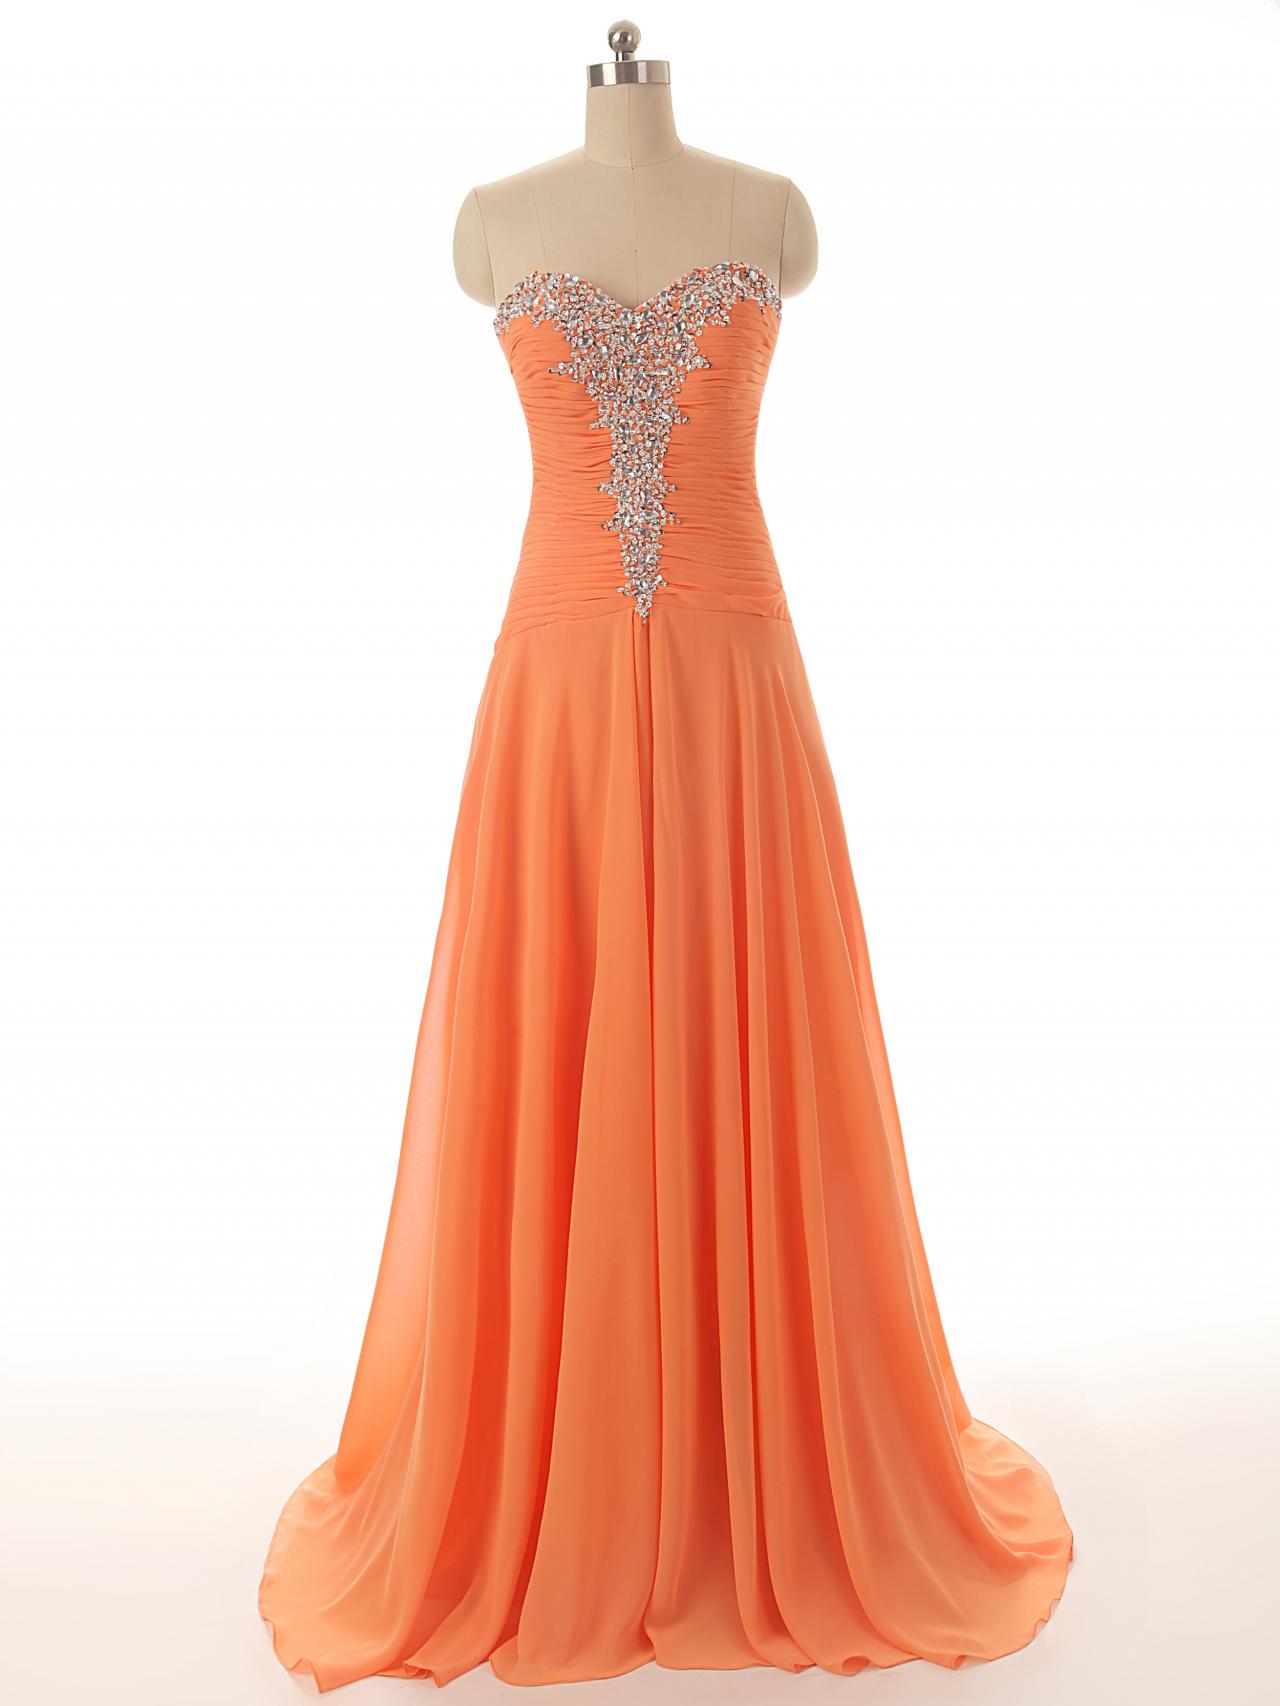 Pretty Orange Sweetheart Prom Dresses,prom Dress,formal Dress, Chiffon Prom Dress,long Dress For Prom, Celebrate Dress,special Occasion Dresses